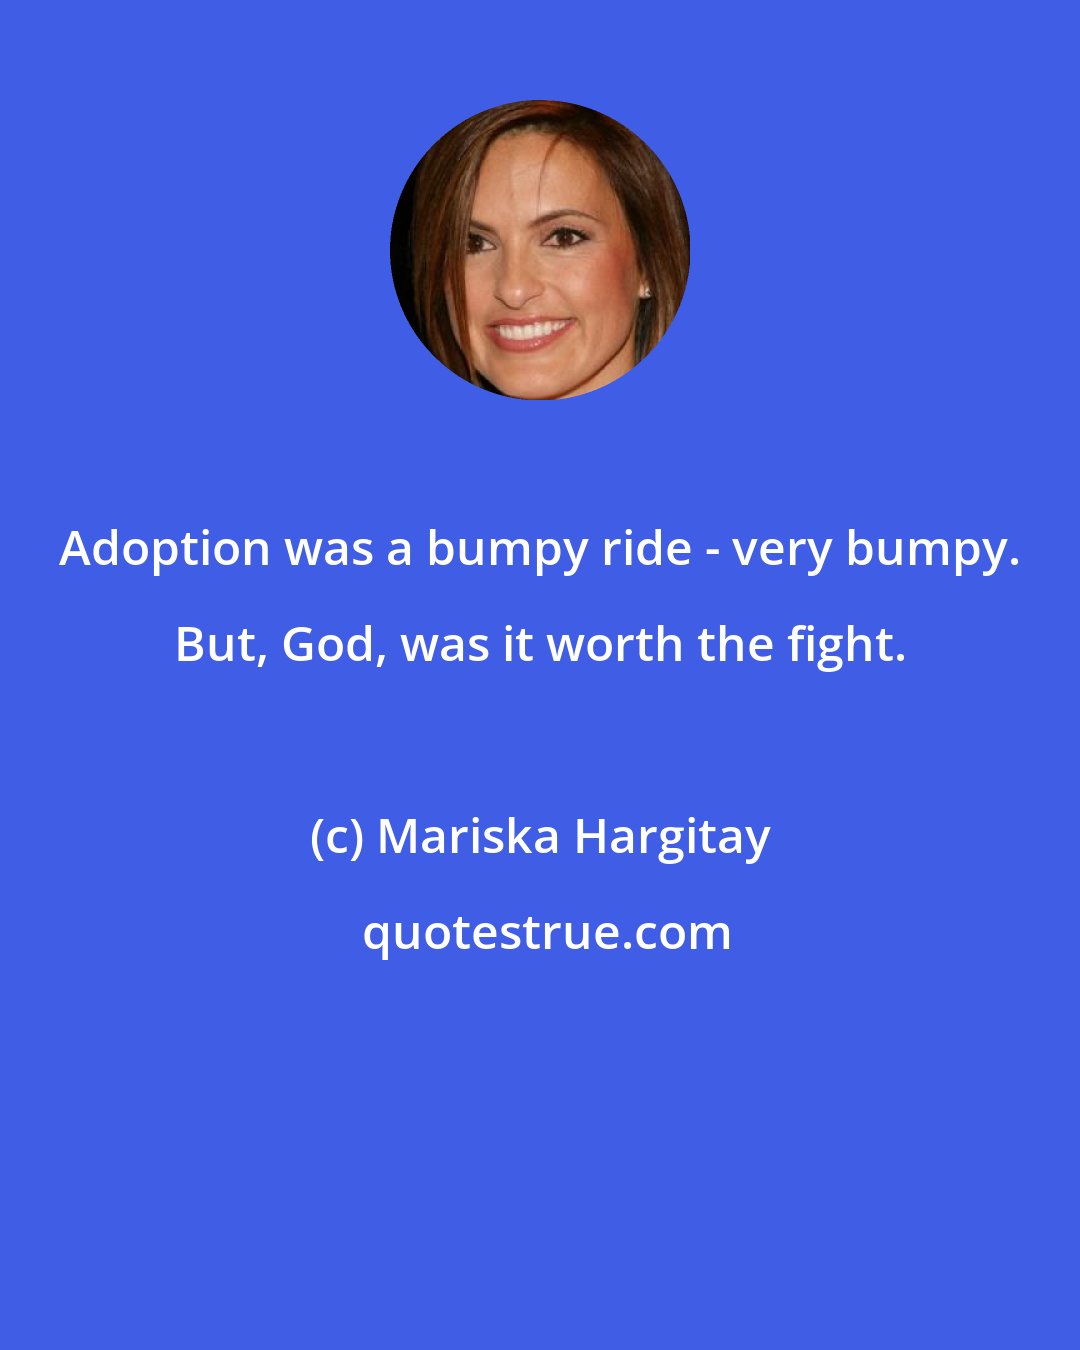 Mariska Hargitay: Adoption was a bumpy ride - very bumpy. But, God, was it worth the fight.